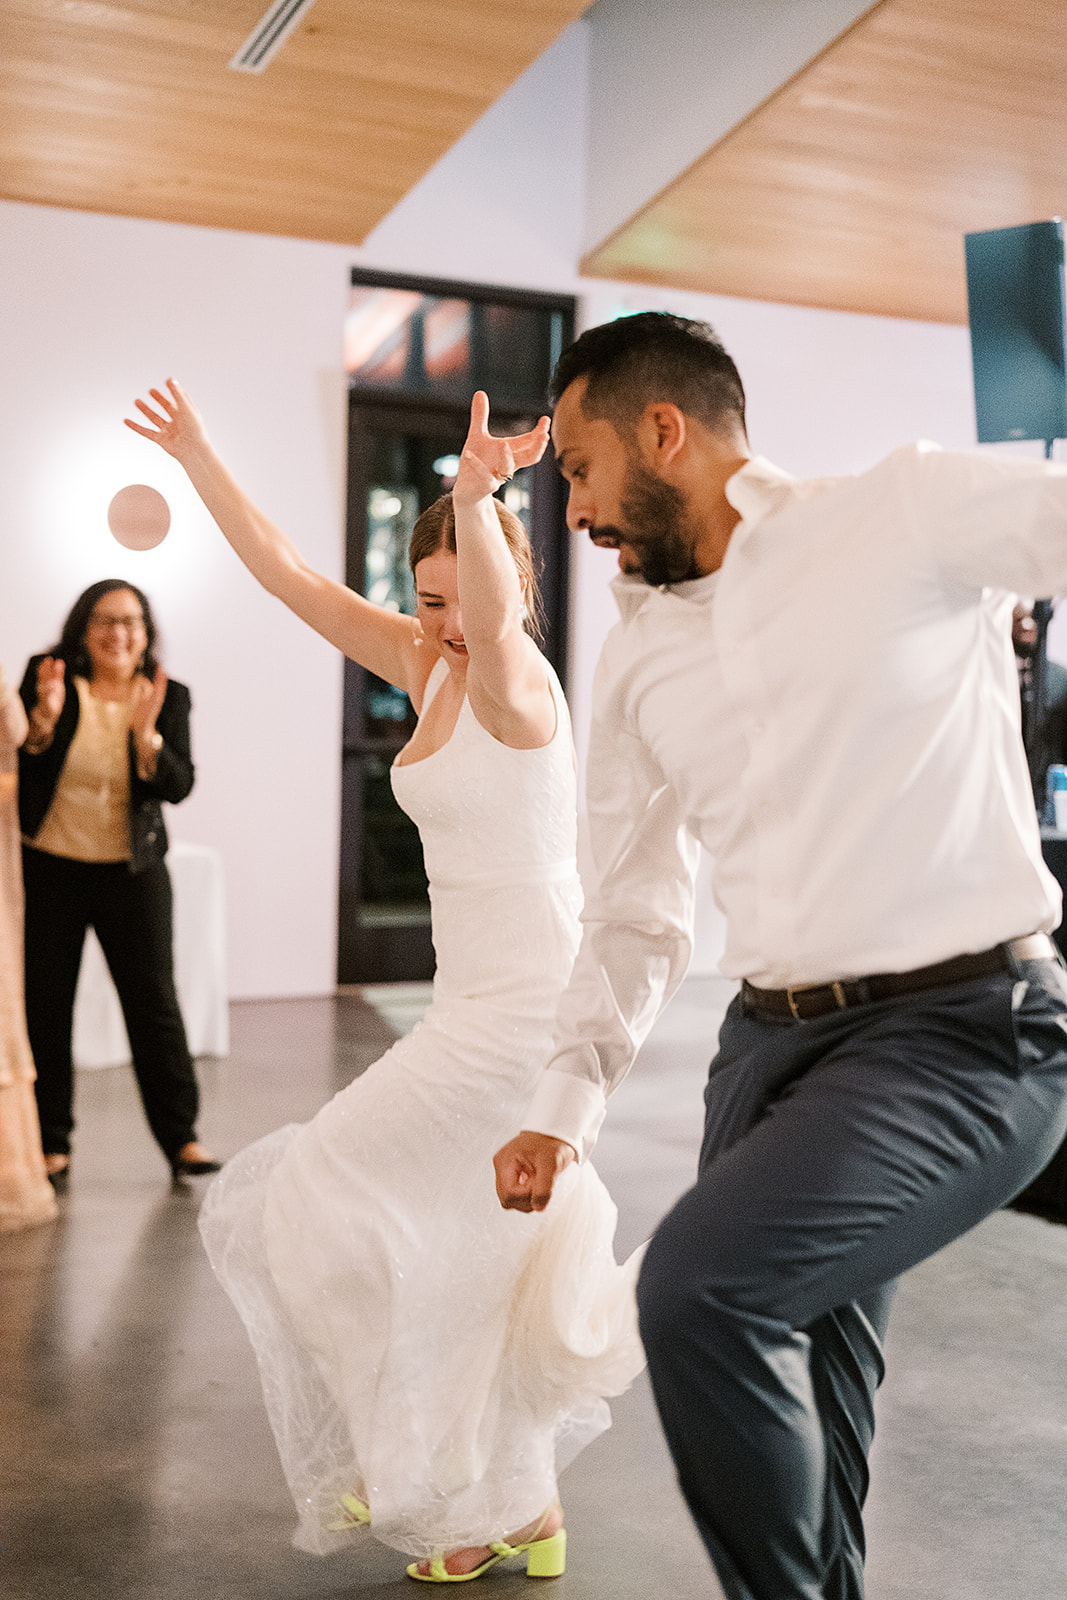 fun first wedding dance ideas